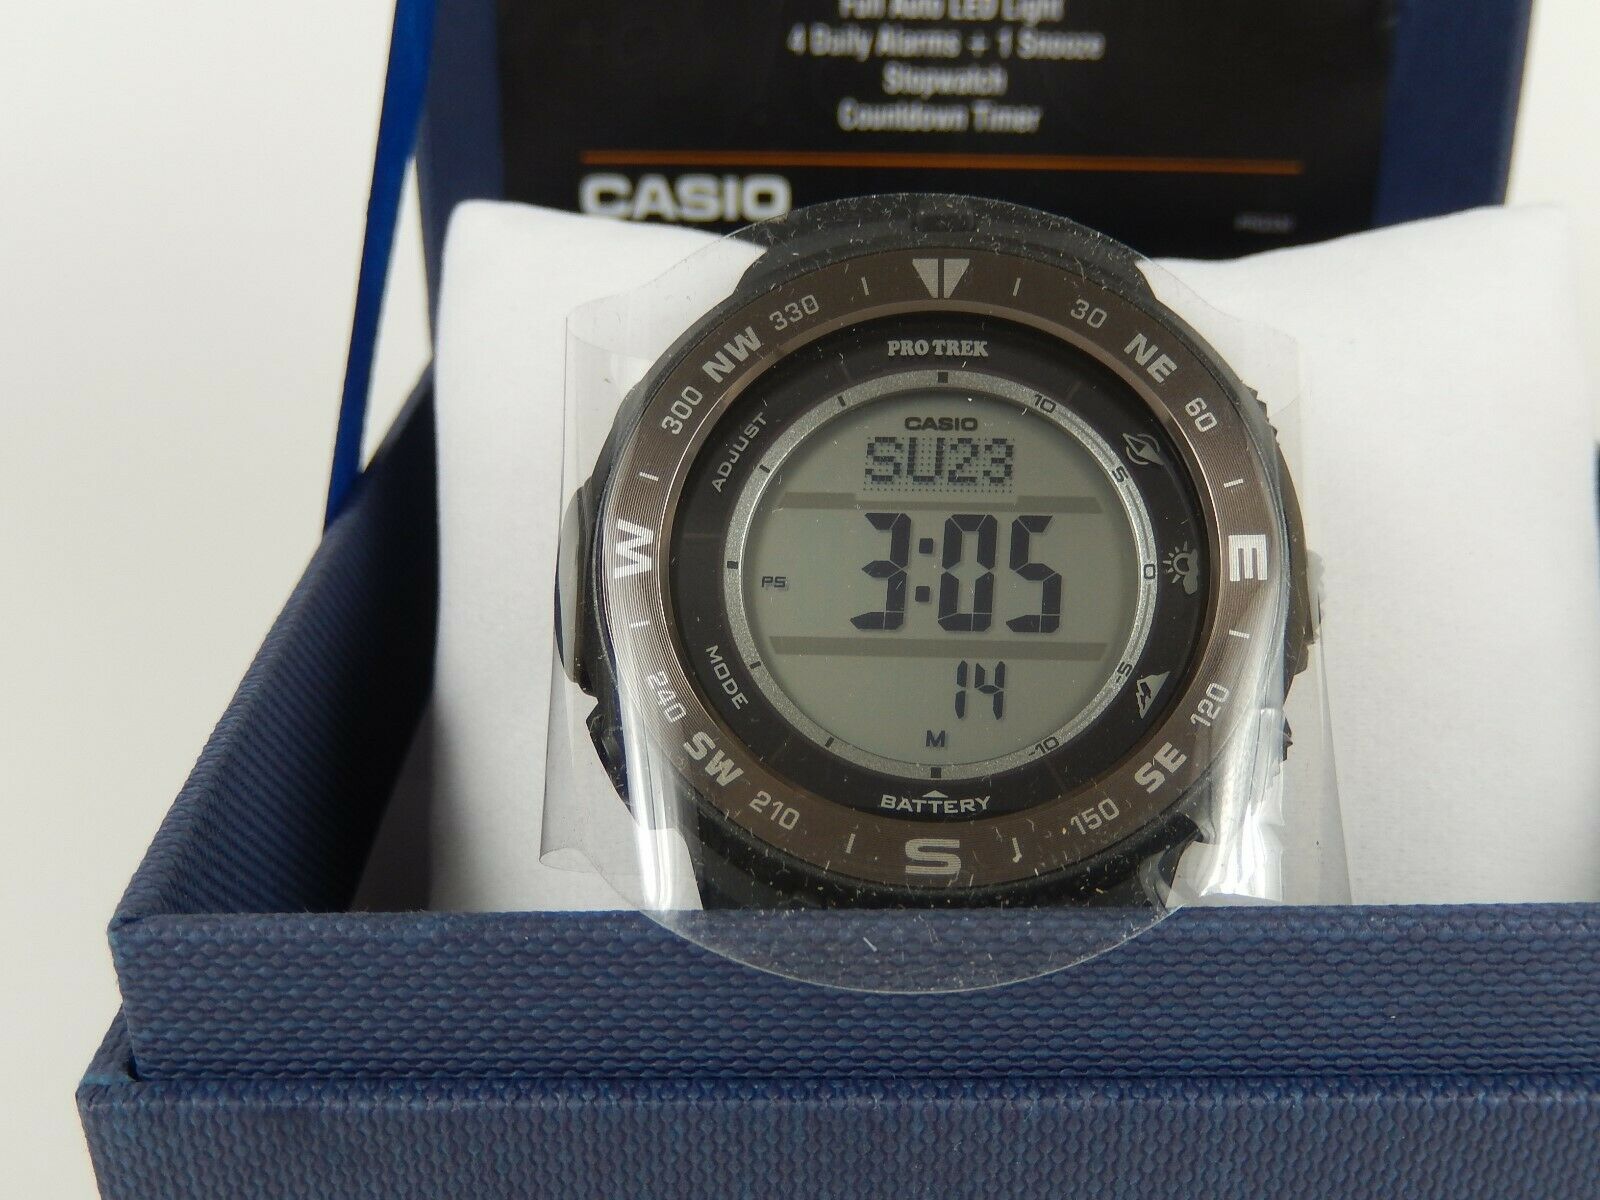 Casio Pro Trek Prg 330 1wc Tough Solar Power Watch Module No 3443 New In Box Watchcharts